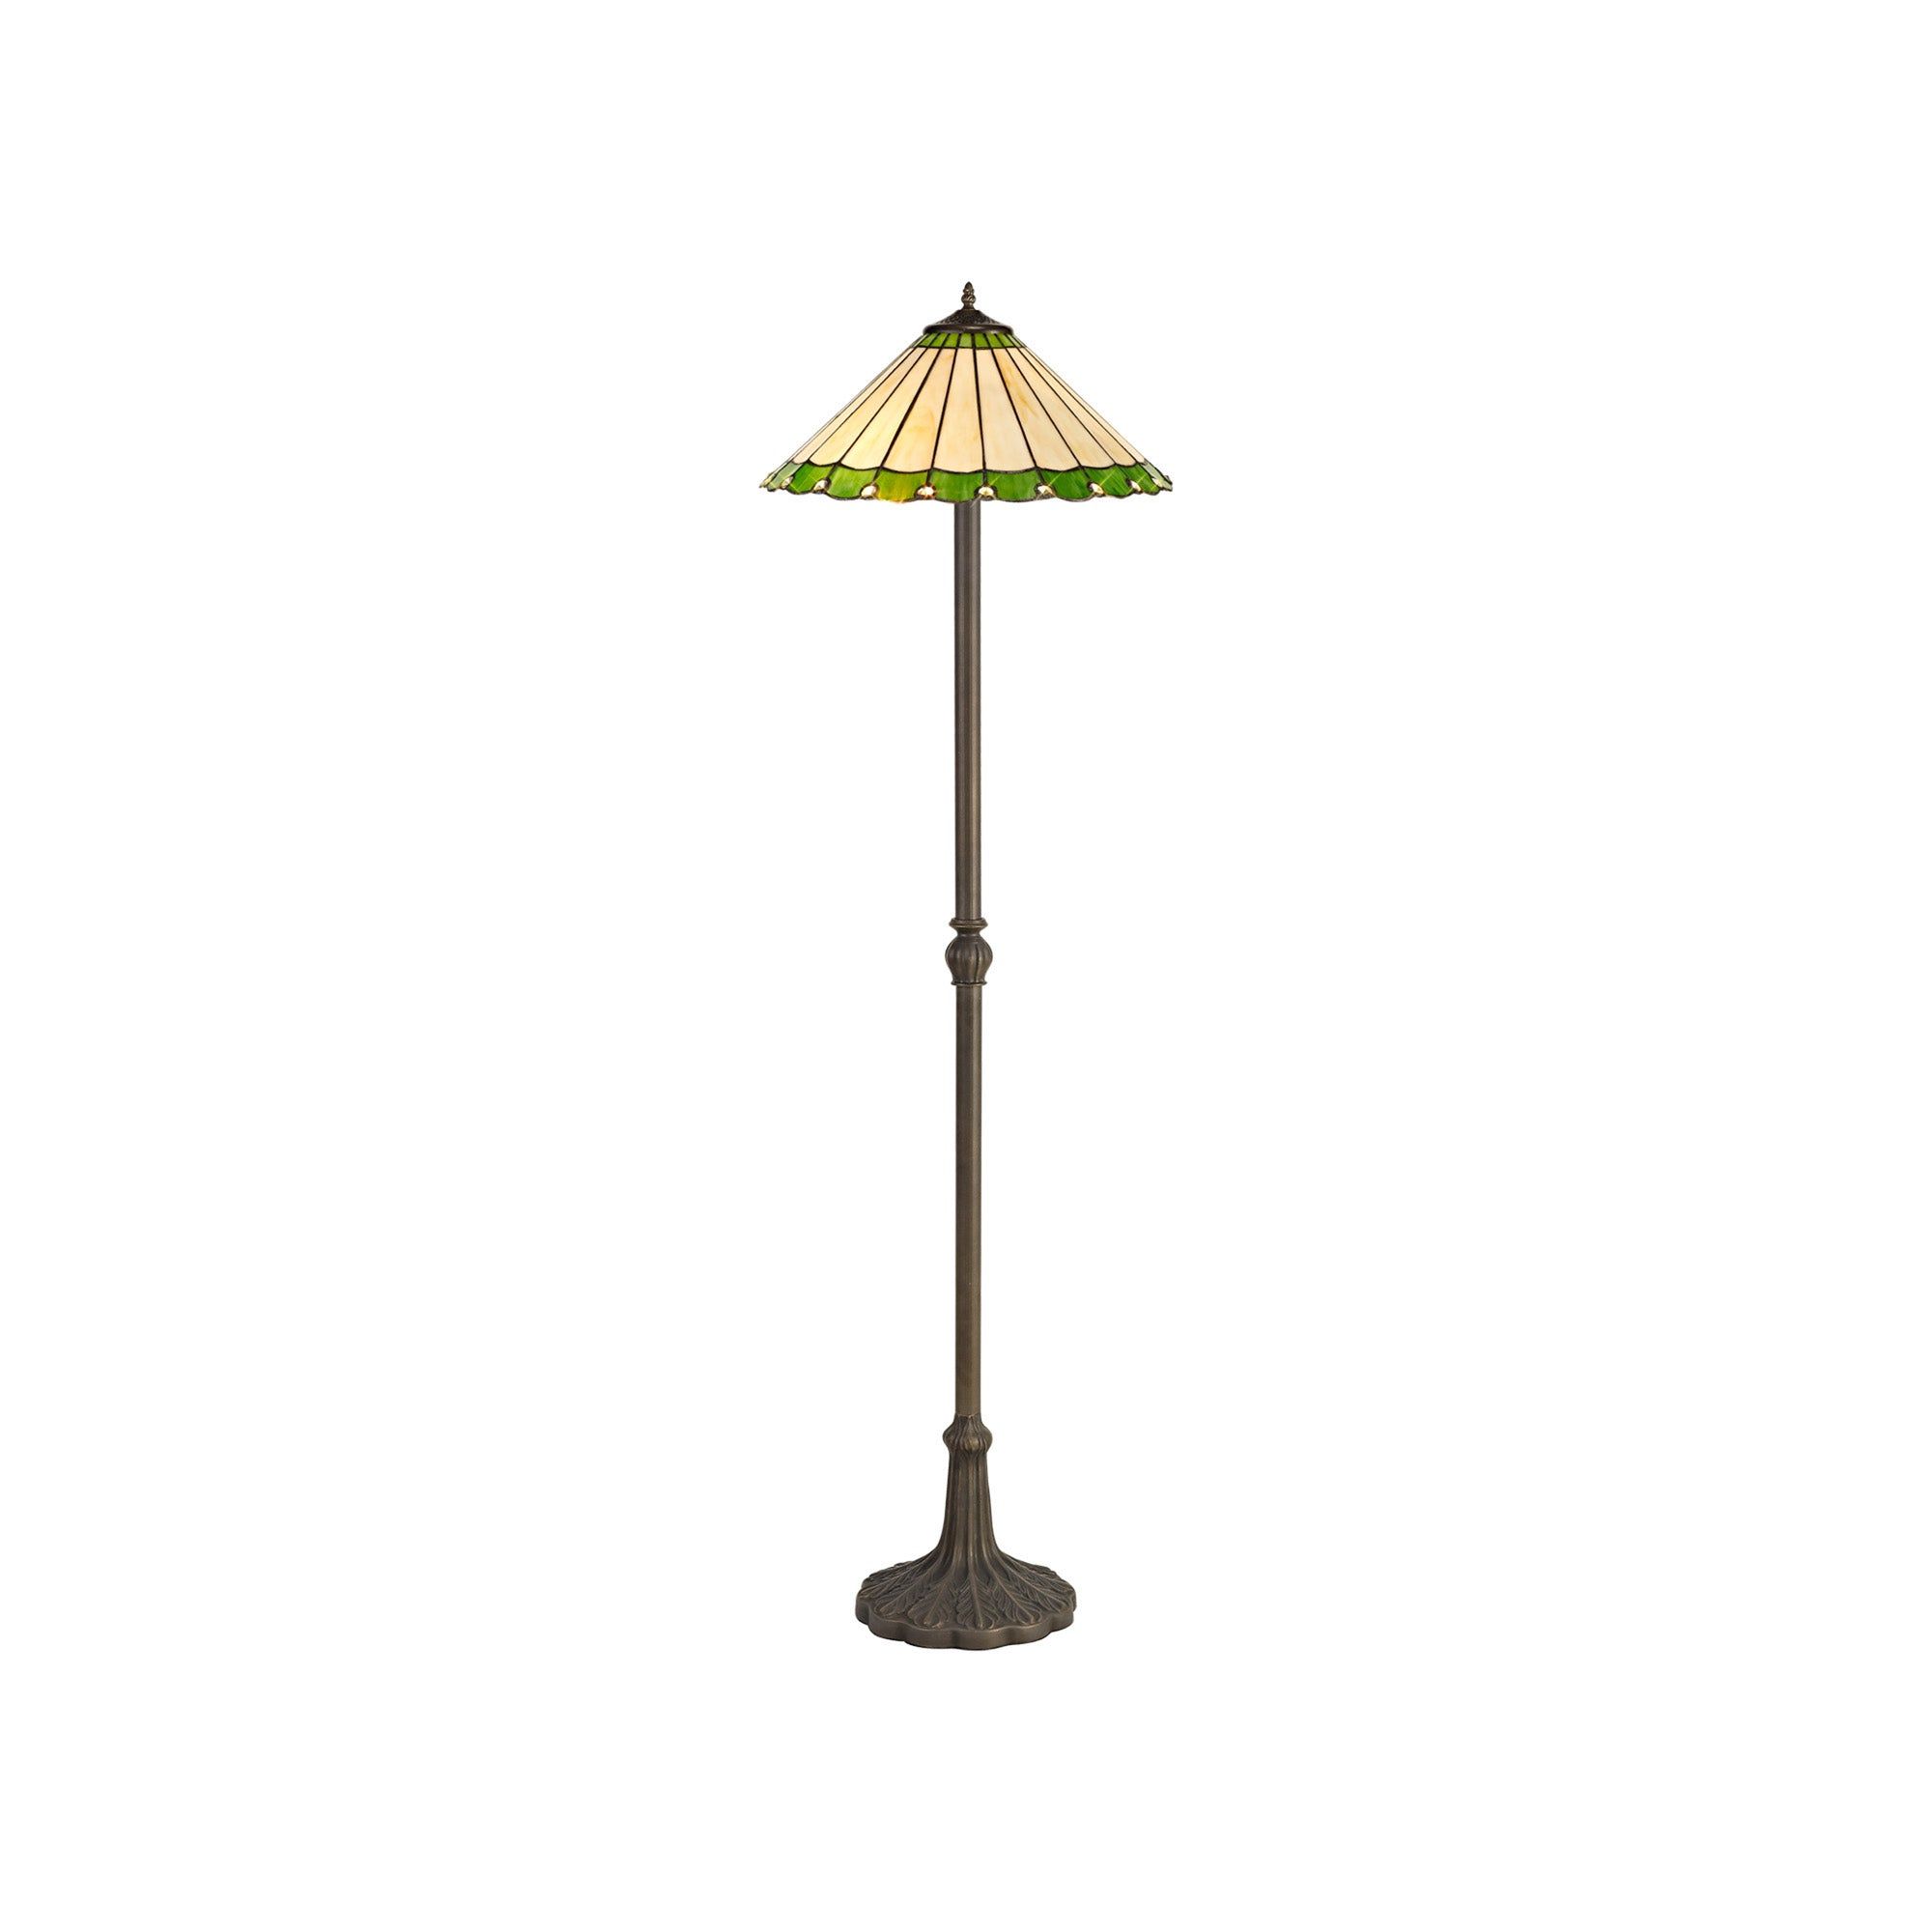 Sheitsr 2 Light Leaf, Octagonal, Stepped Design Floor Lamp E27 With 40cm Tiffany Shade